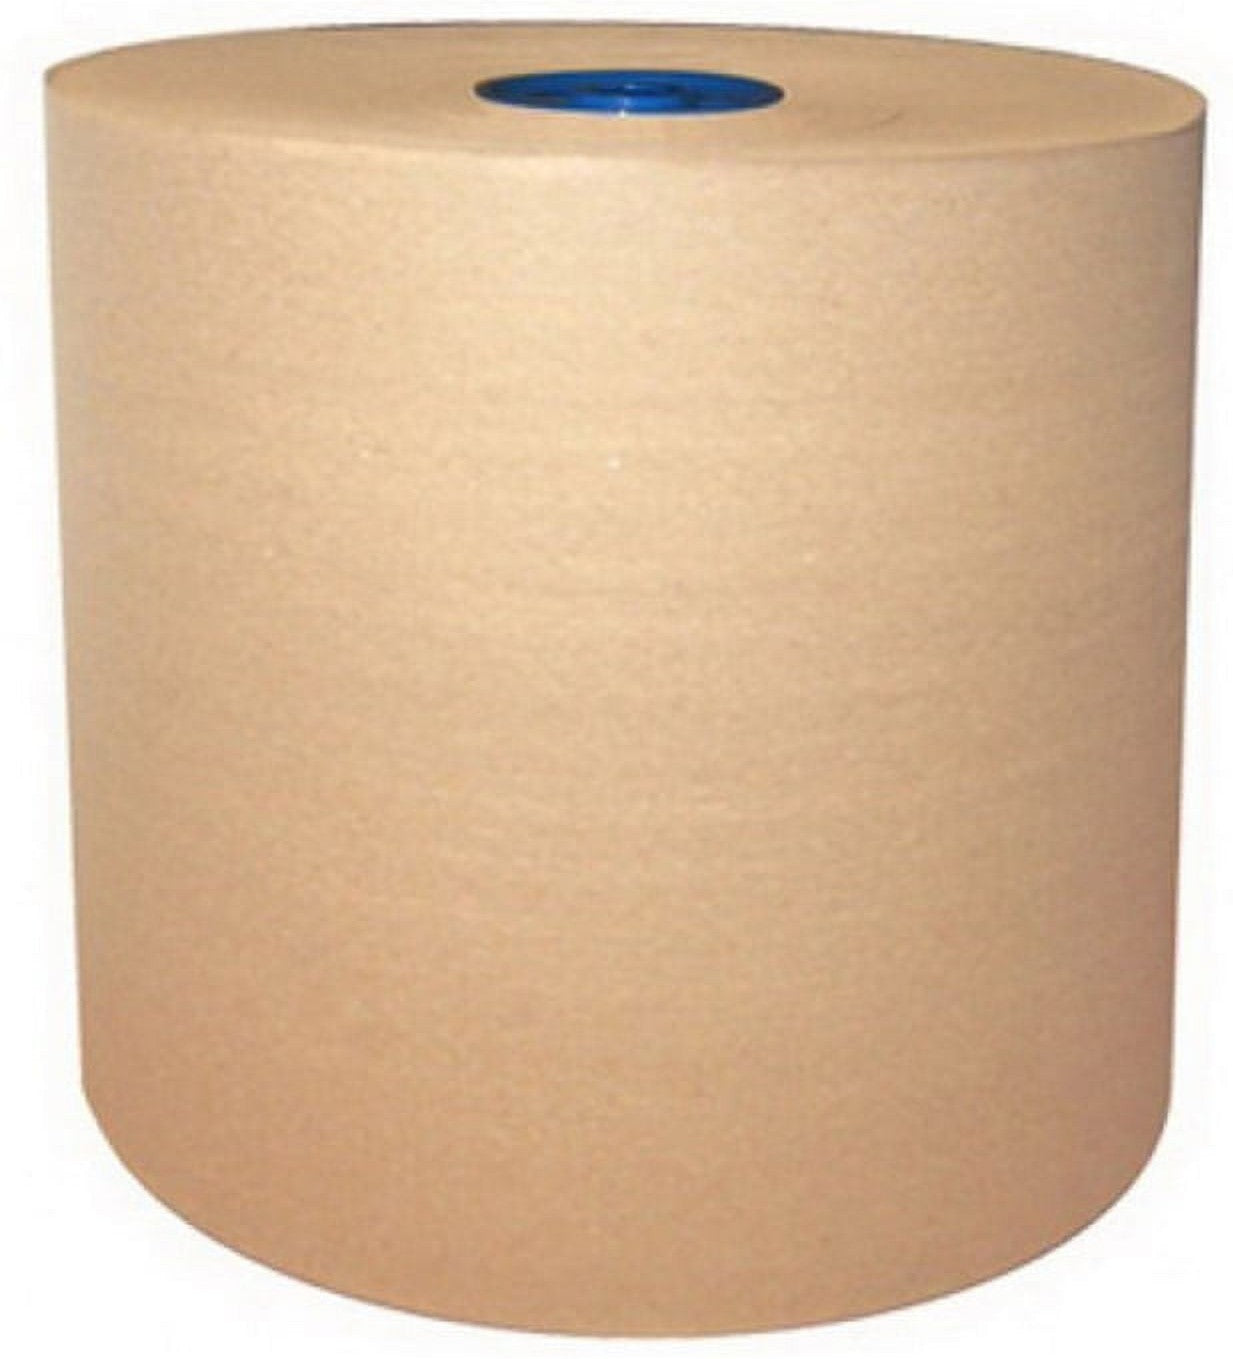 Cascades Tissue Group - Moka Tandem+ Roll Towel - T225/1324